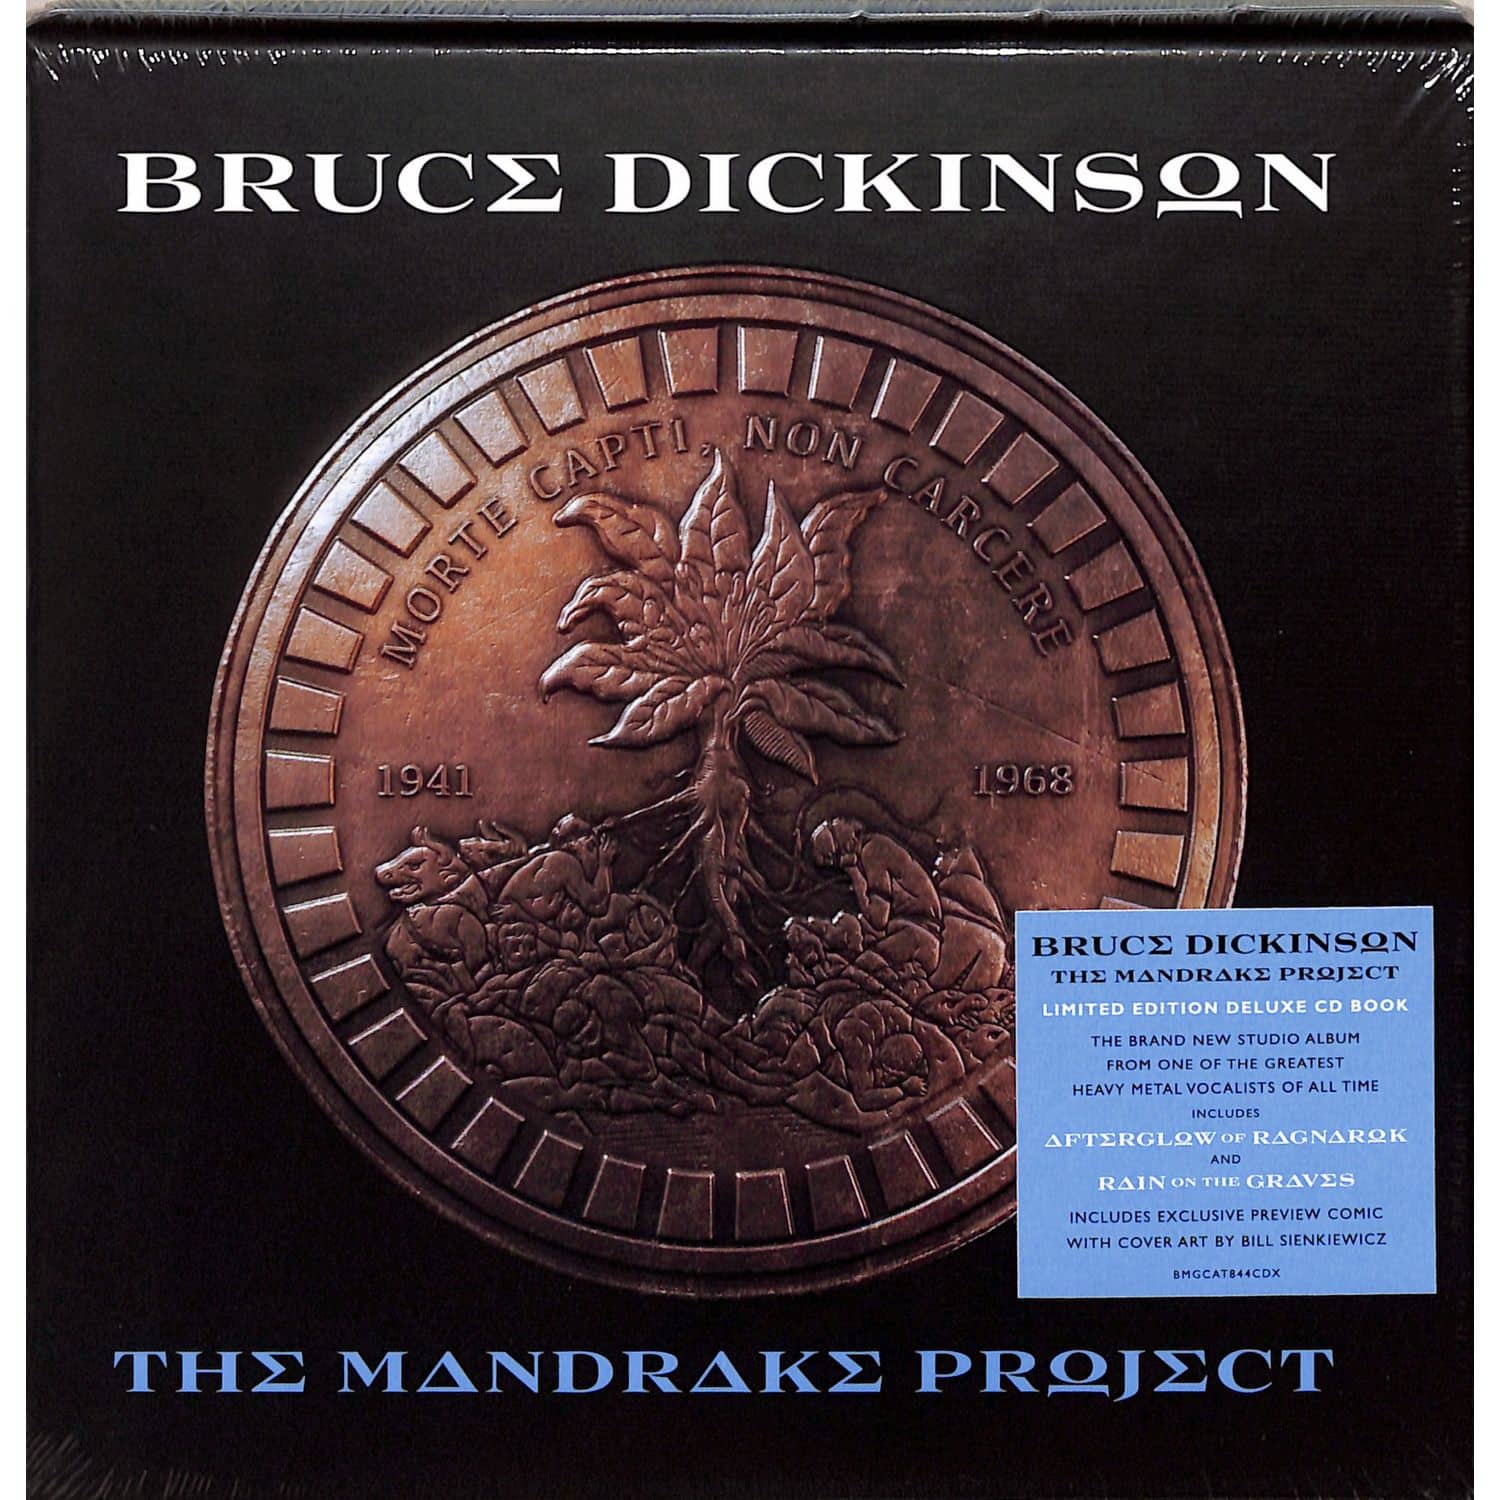 Bruce Dickinson - THE MANDRAKE PROJECT